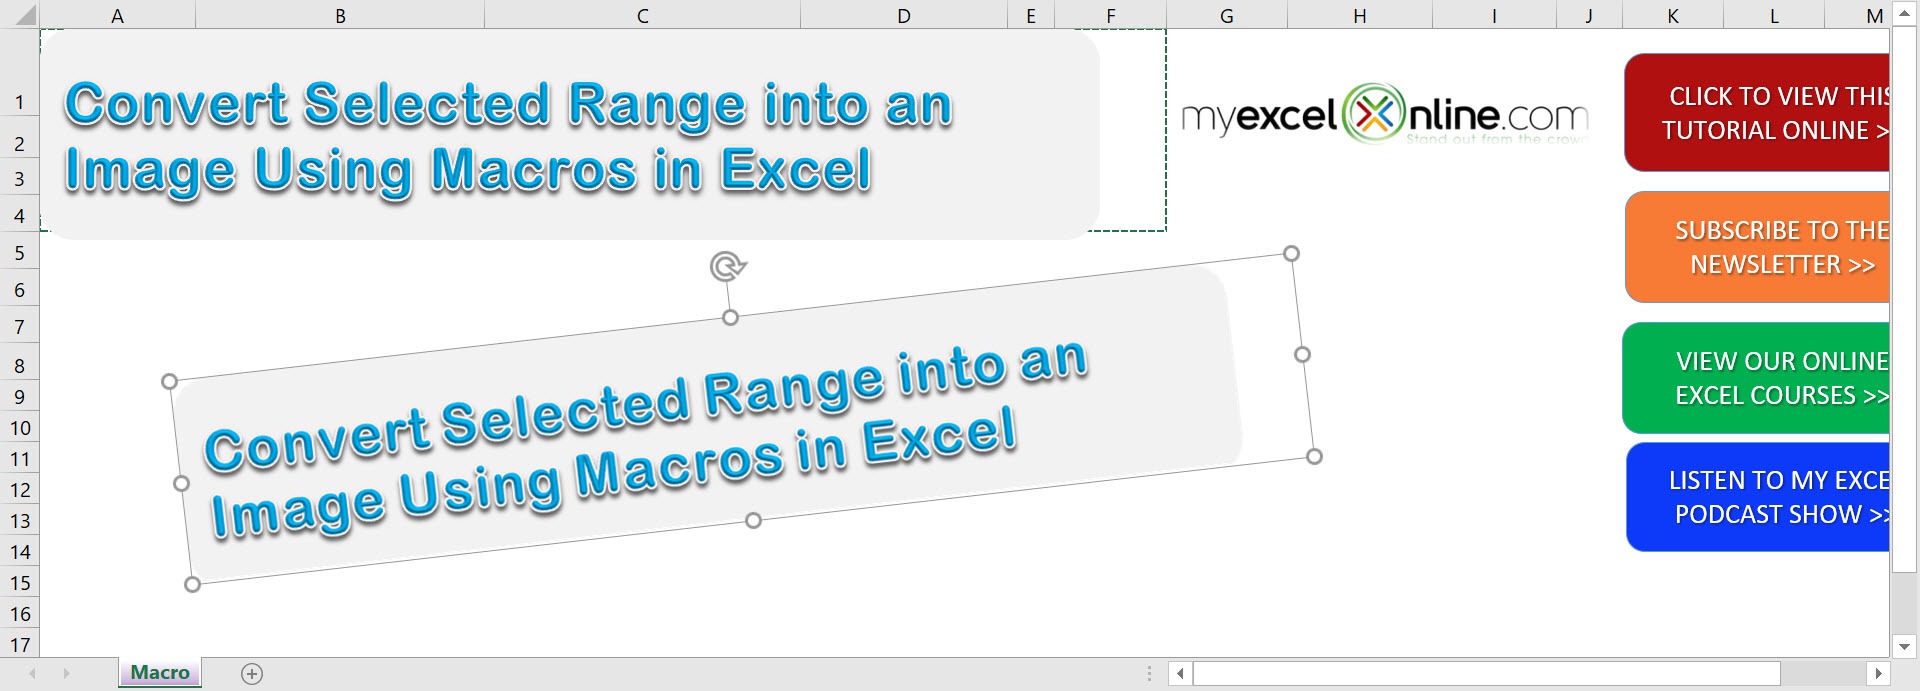 Convert Selected Range into an Image Using Macros In Excel | MyExcelOnline